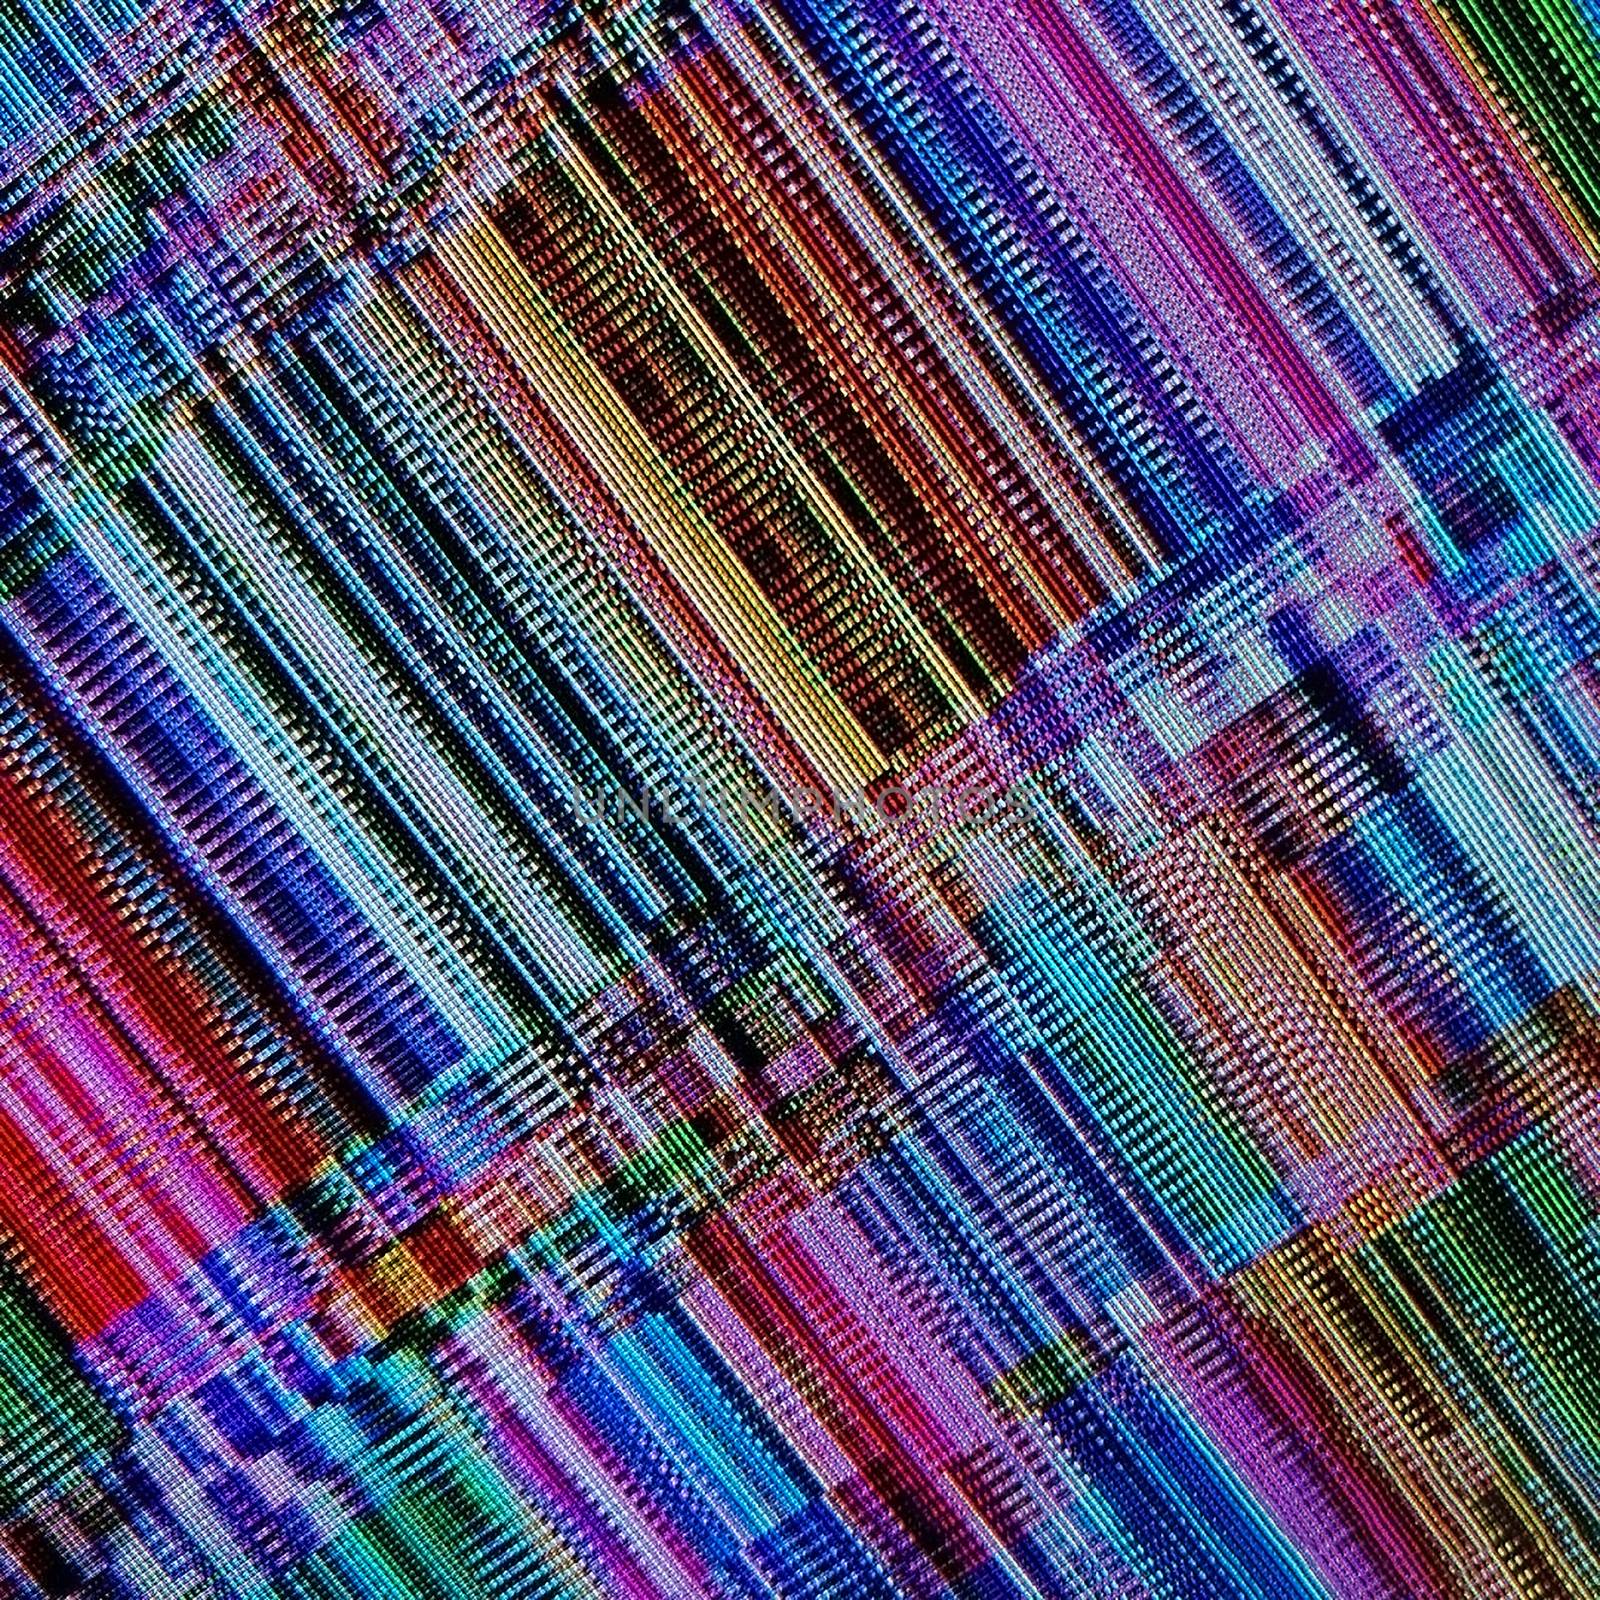 Abstract digital painting. Diagonal crossed lines.